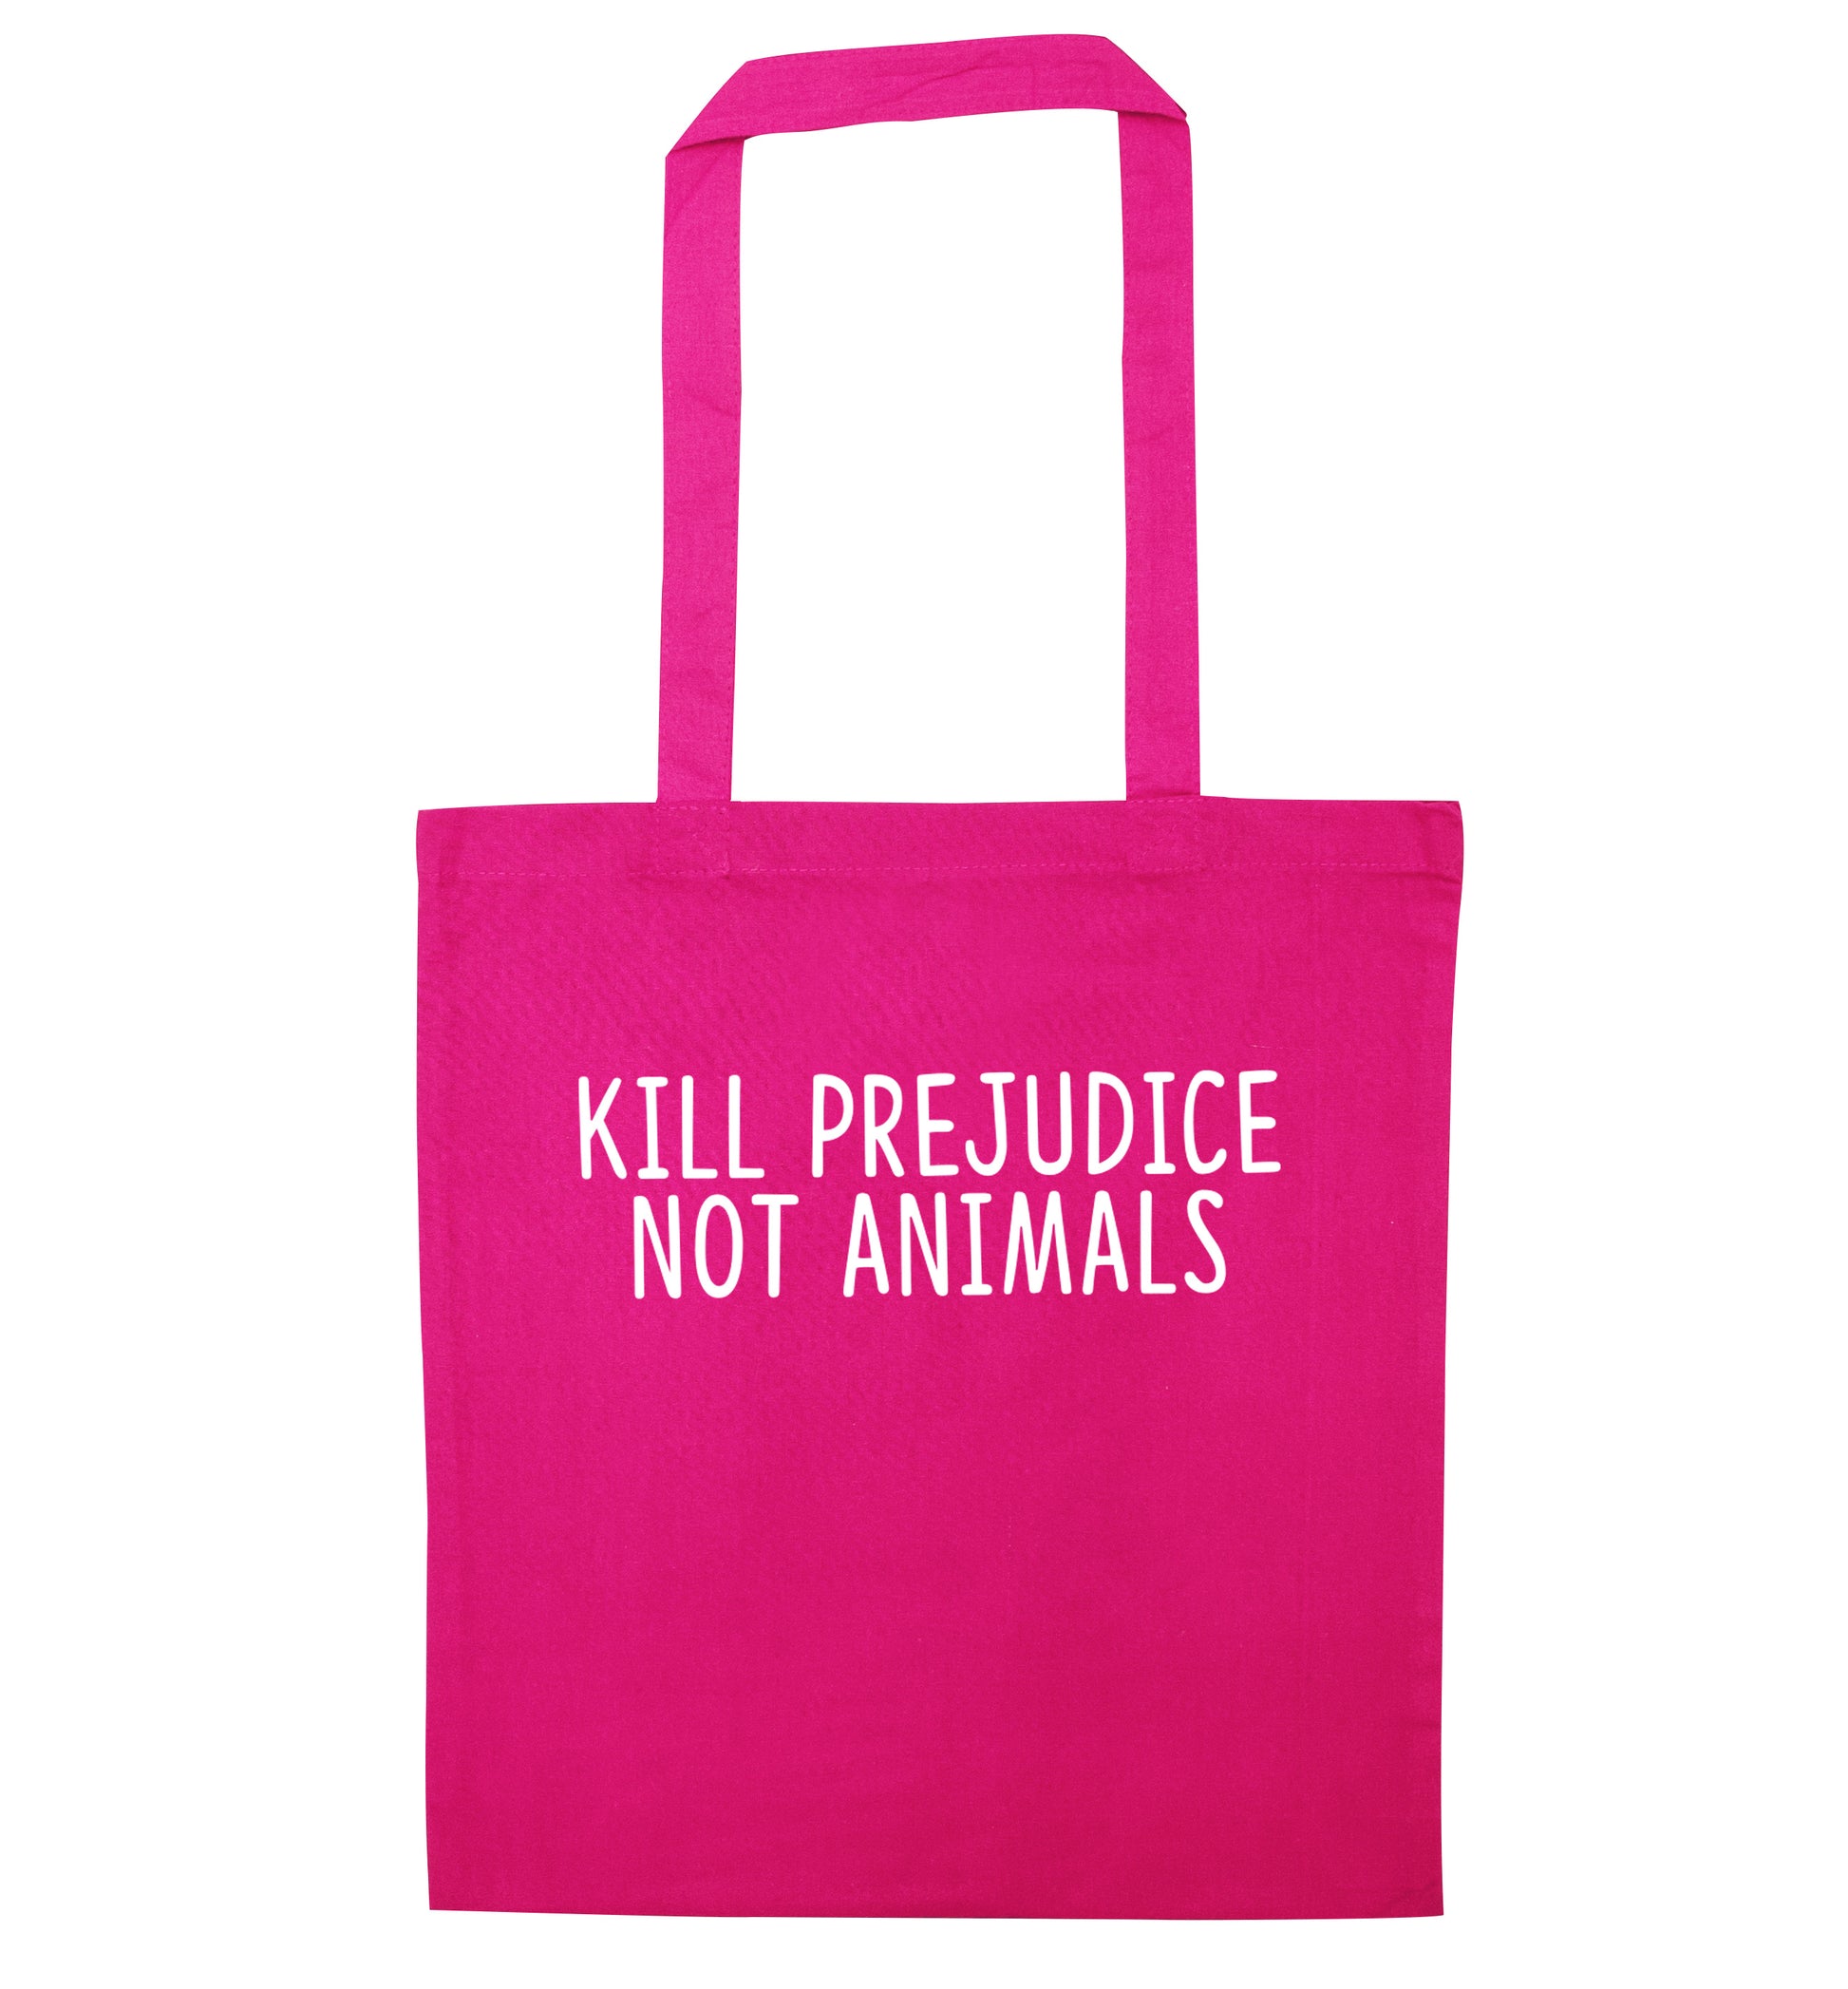 Kill Prejudice Not Animals pink tote bag